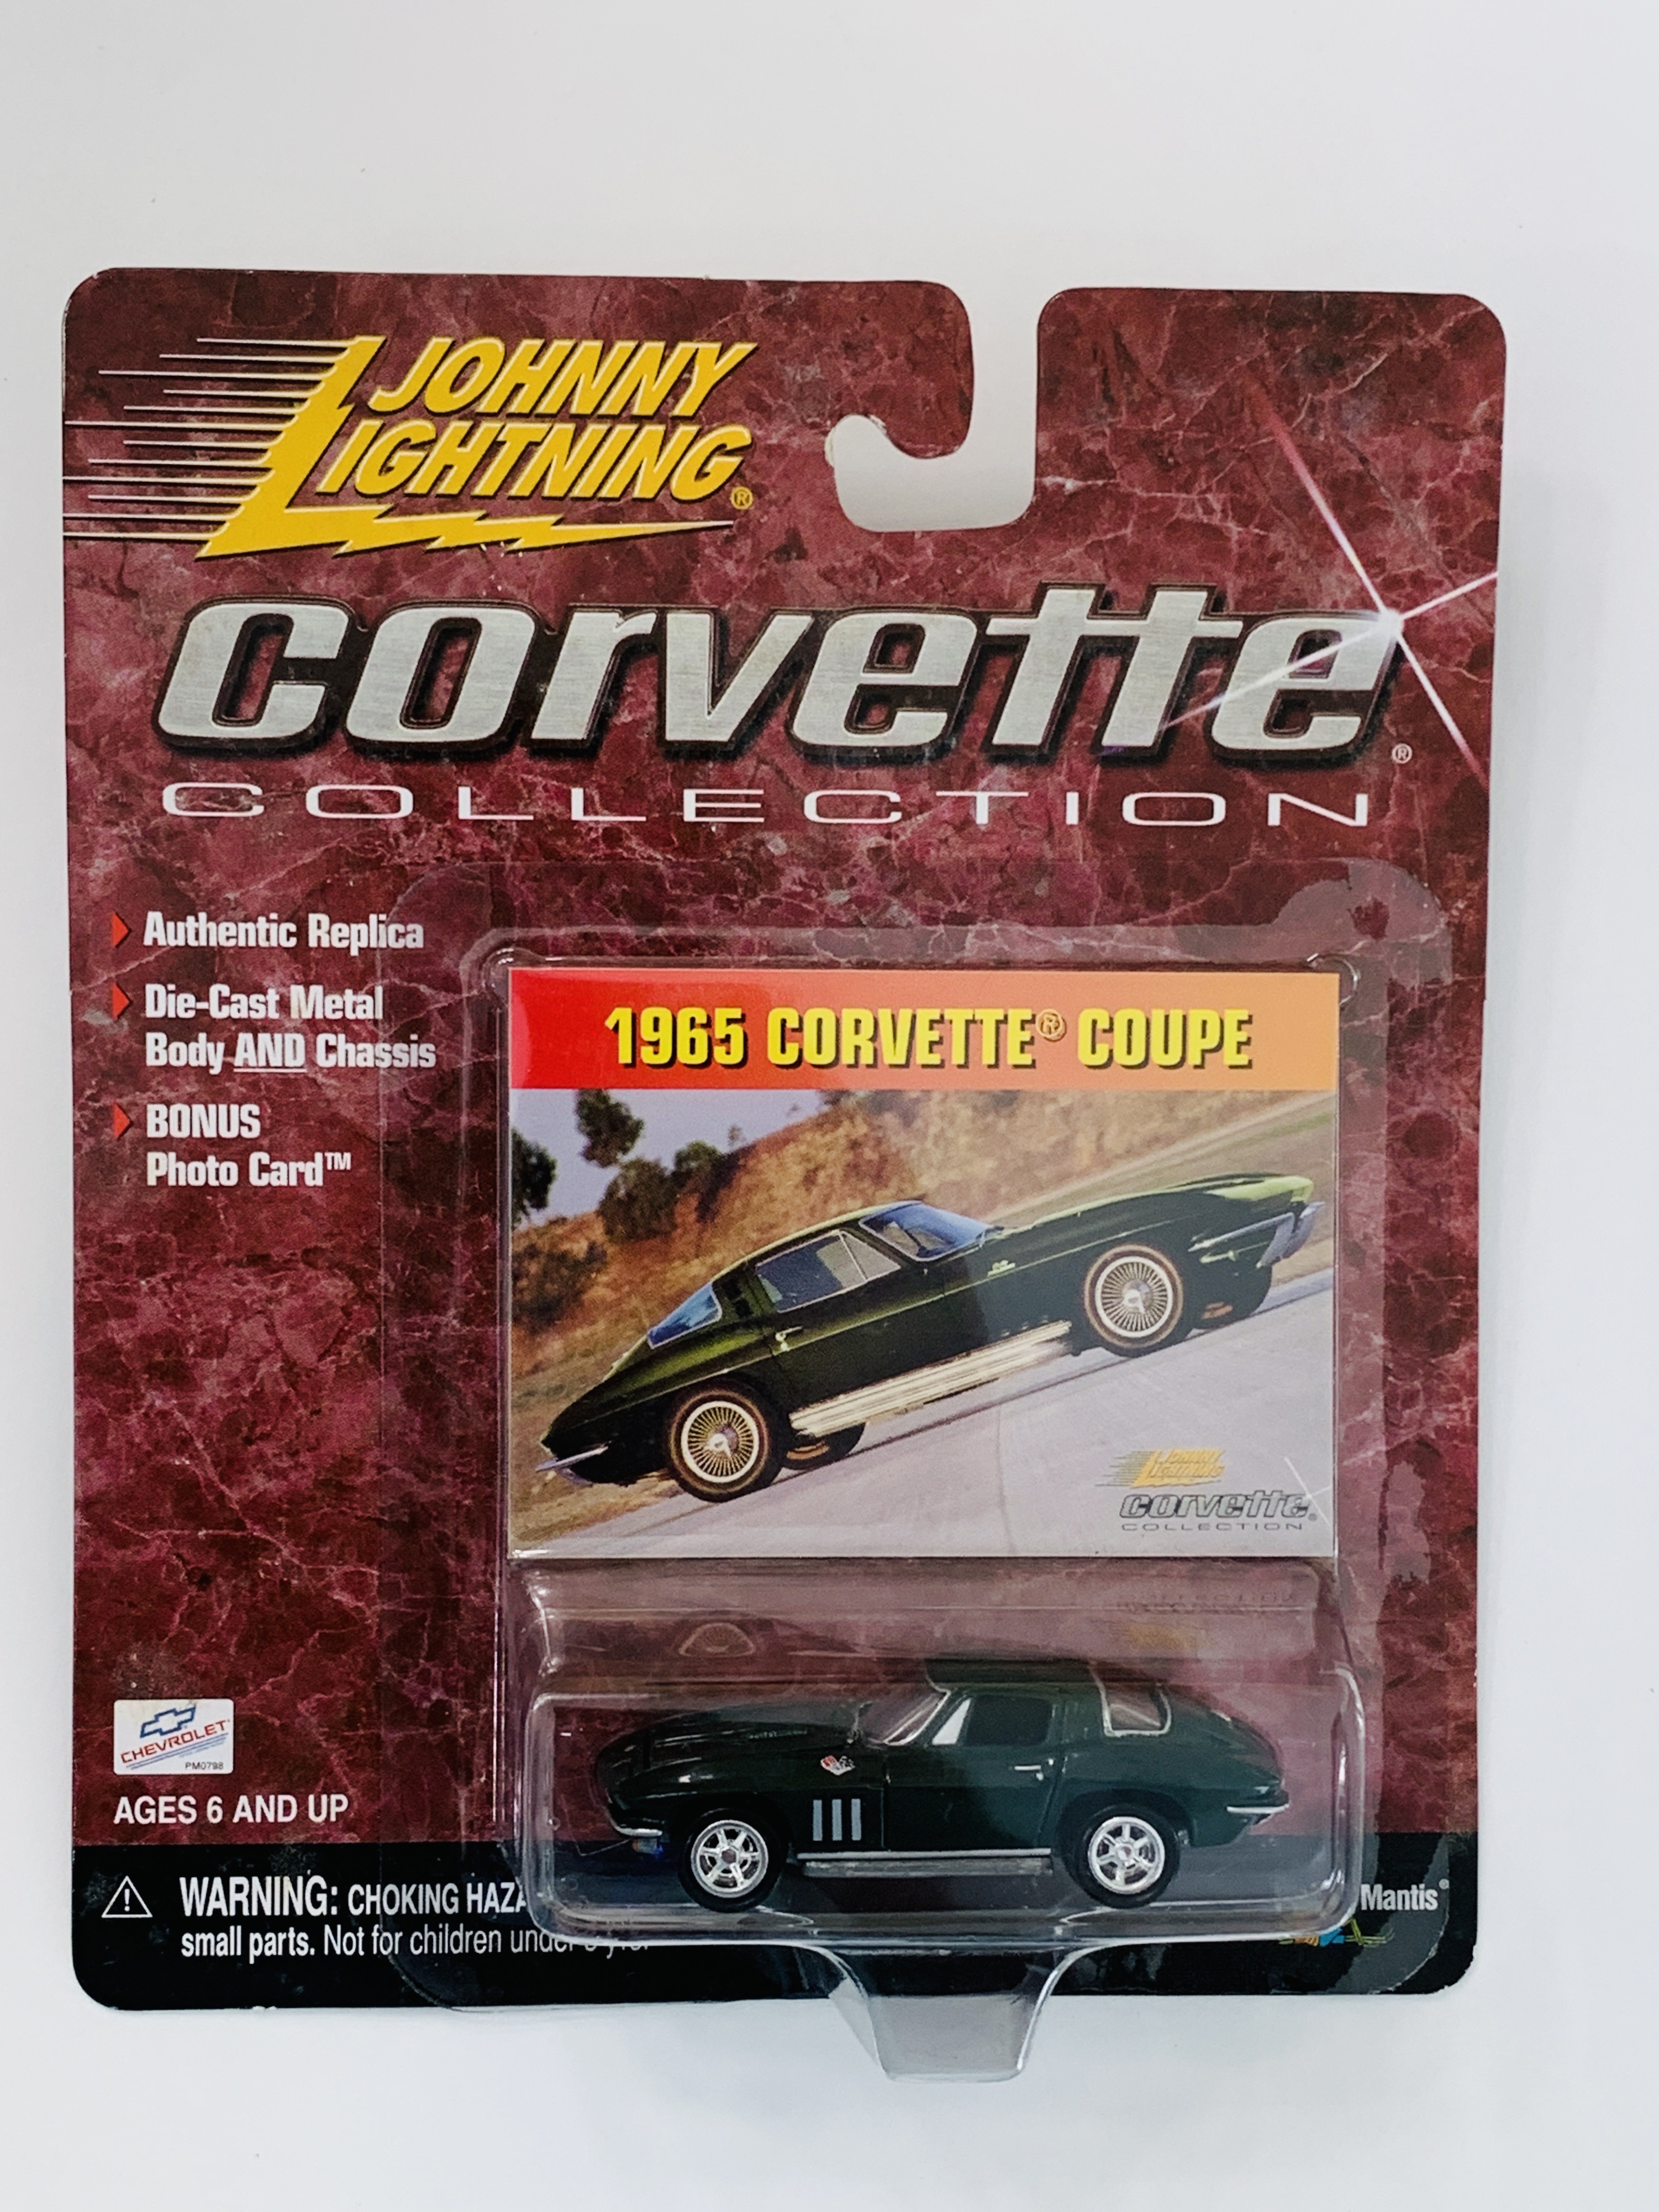 Johnny Lightning Corvette Collection 1965 Corvette Coupe